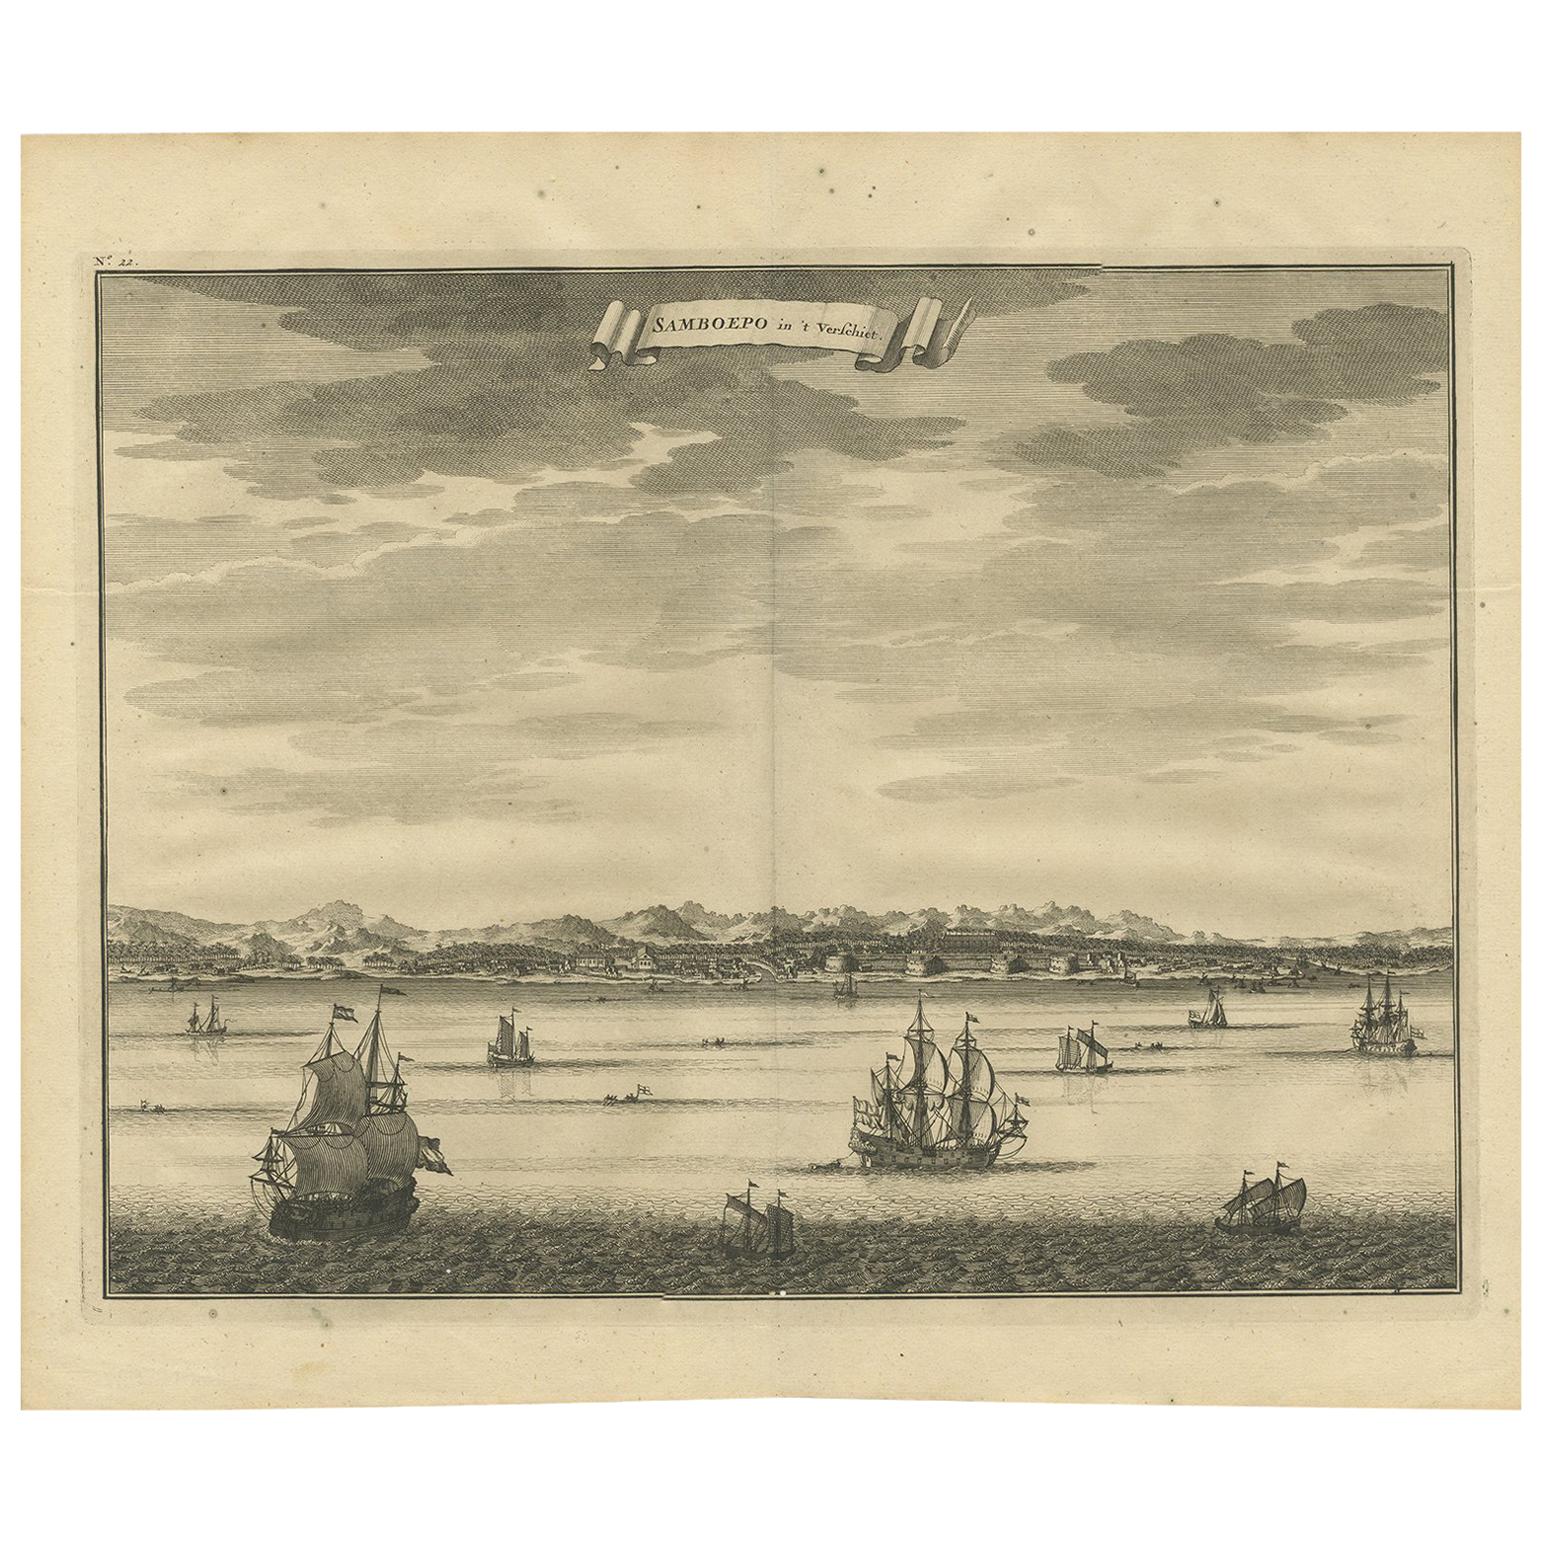 Impression ancienne de Samboepo par Valentijn, 1726 en vente